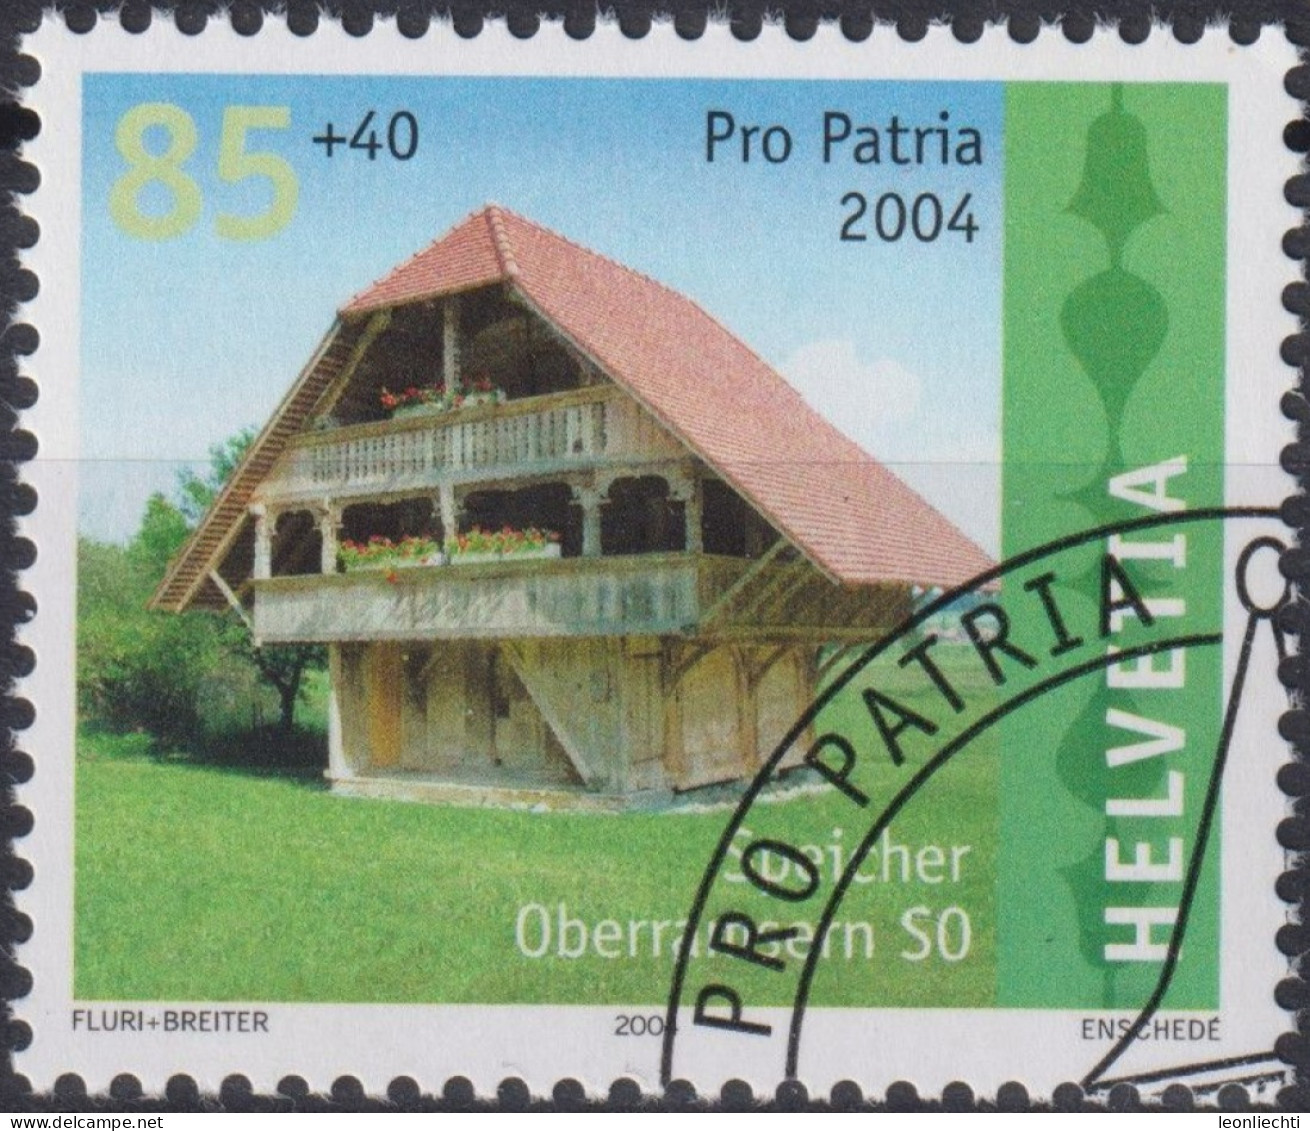 2004 Schweiz Pro Patria, Speicher, Oberramsern SO ⵙ Zum:CH B285, Mi:CH 1875, Yt:CH 1805 - Gebraucht